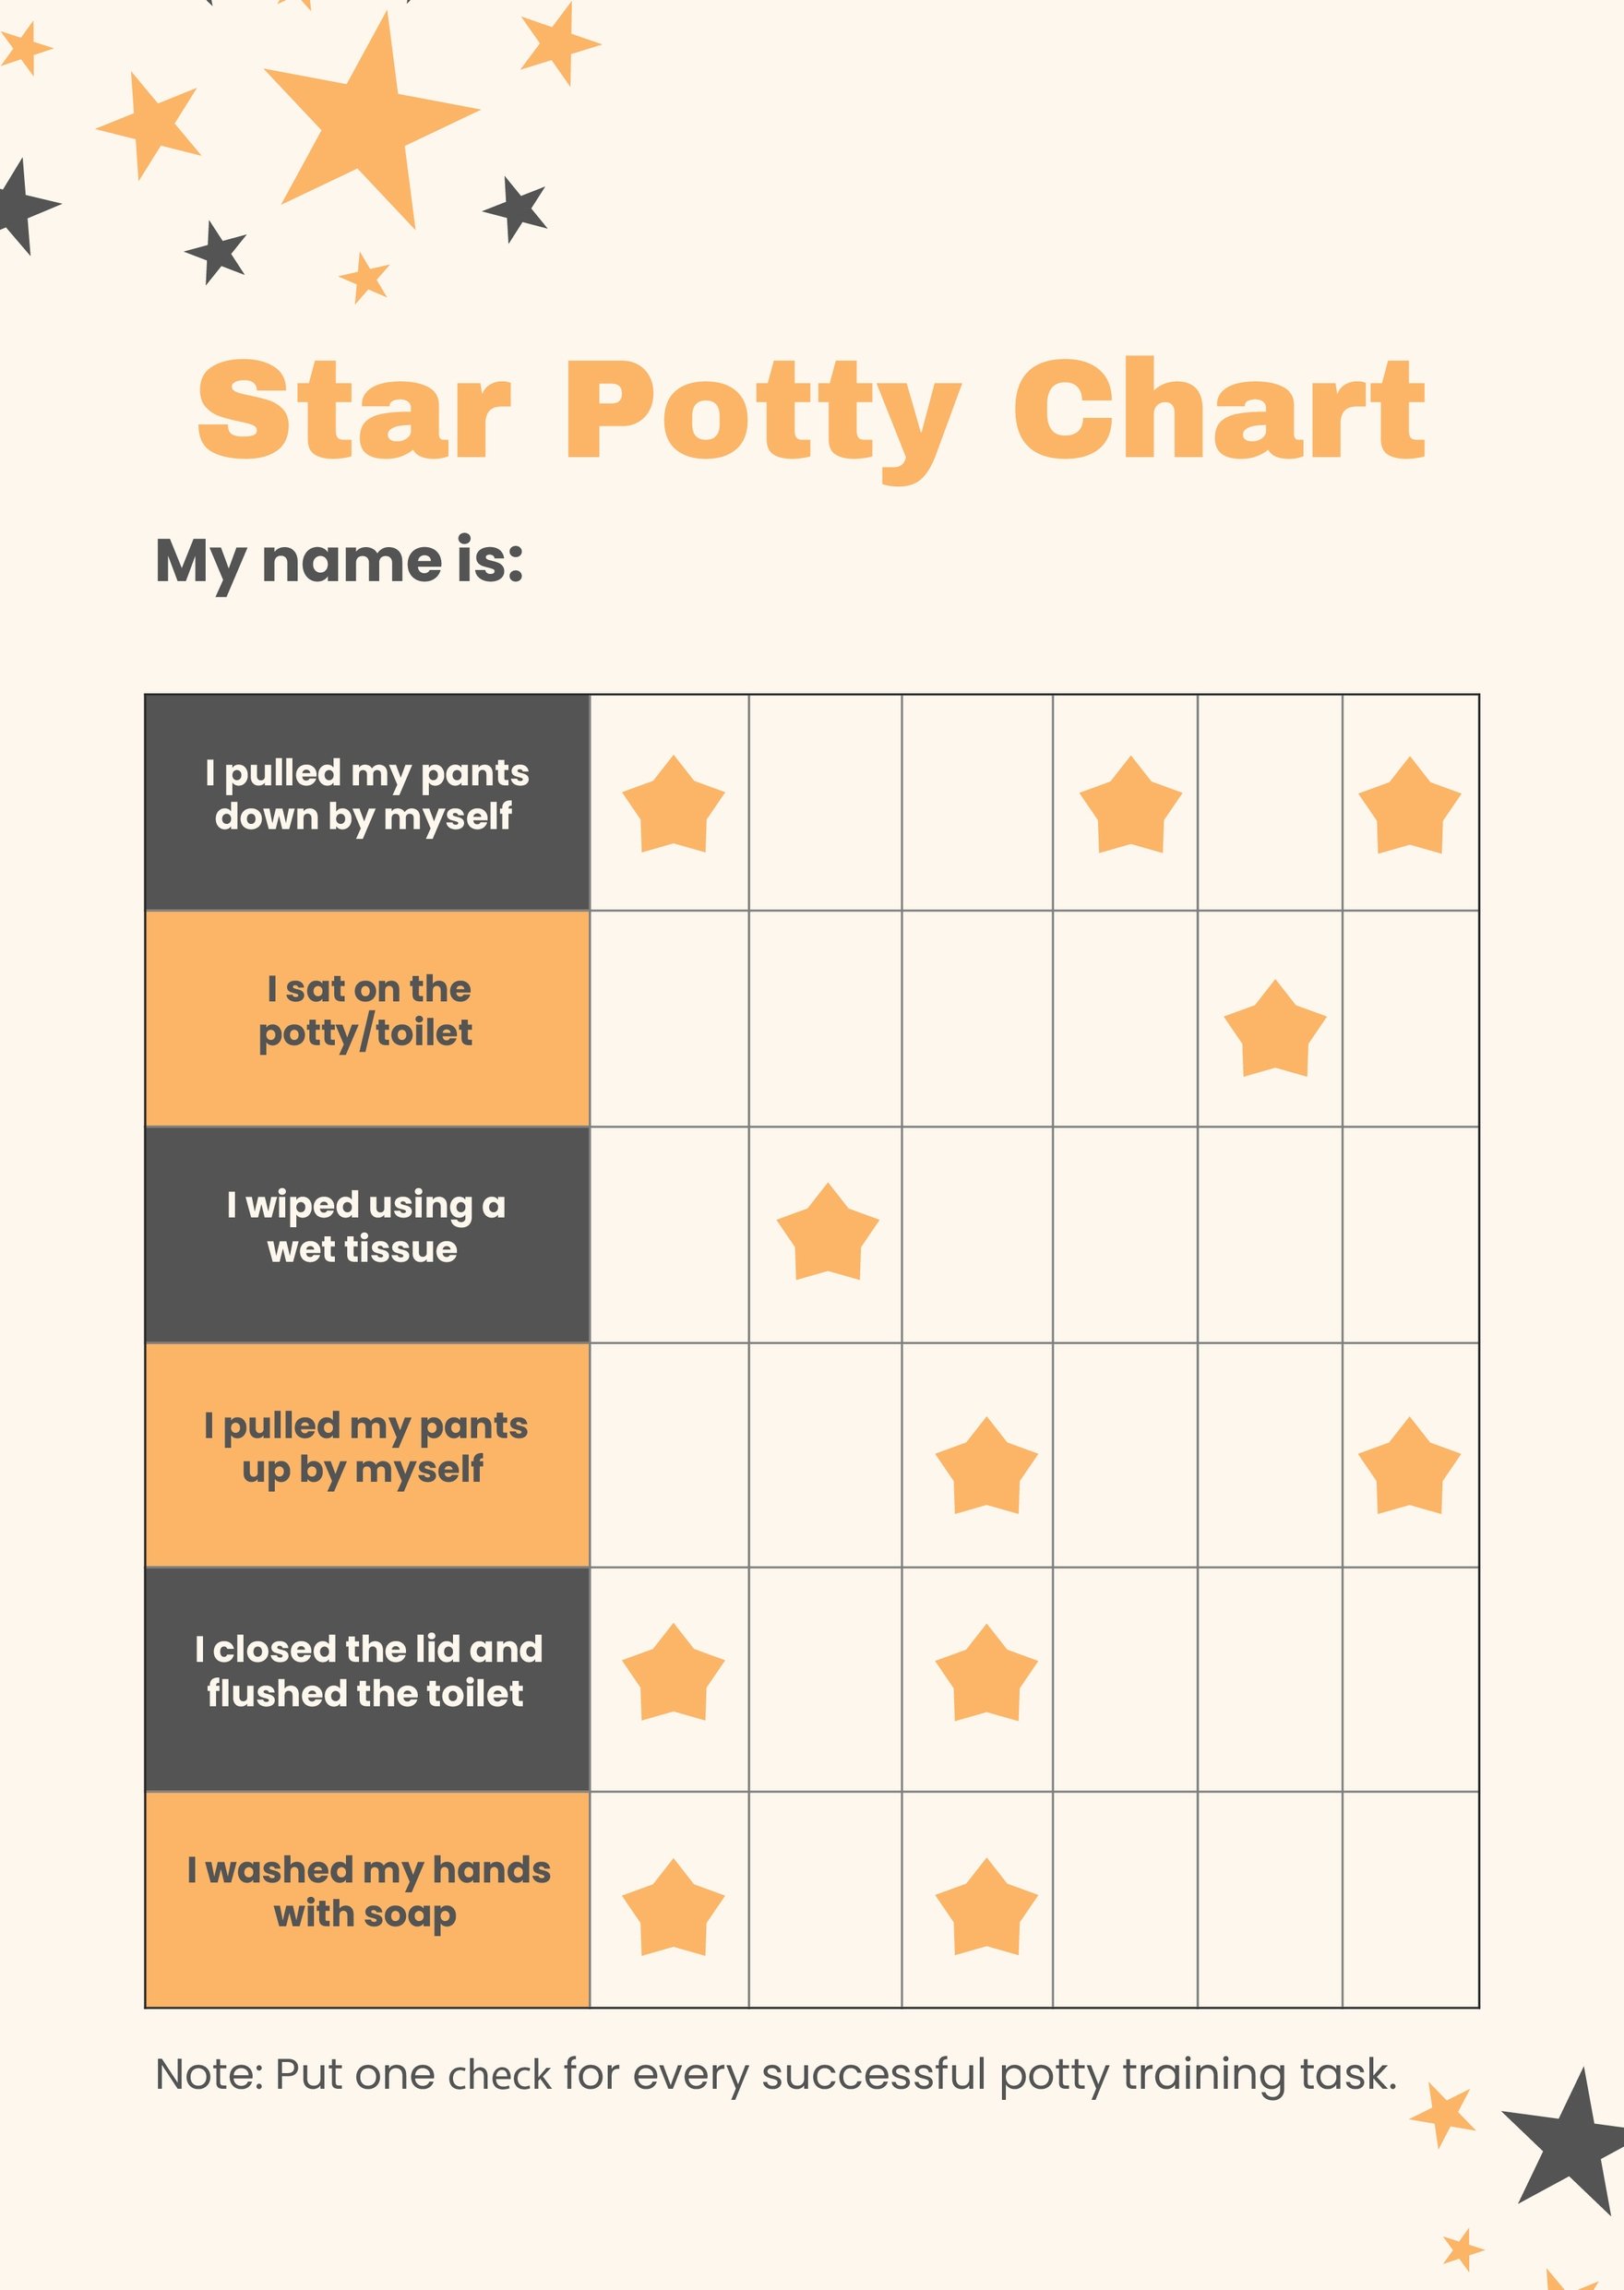 Star Potty Chart in PDF, Illustrator